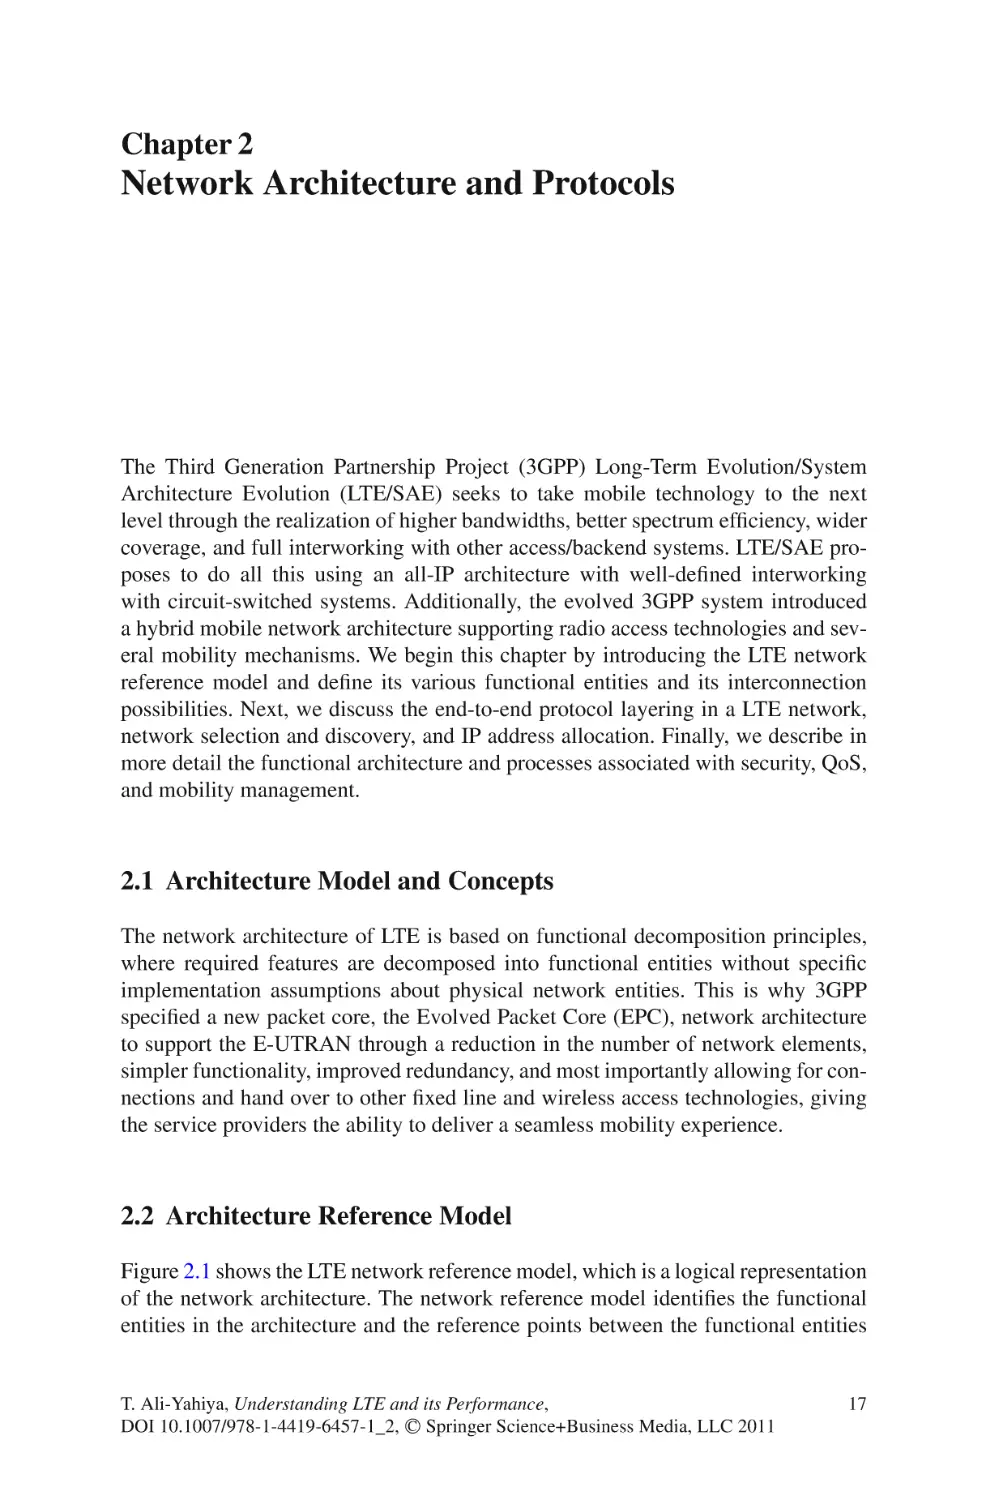 2  Network Architecture and Protocols
2.1  Architecture Model and Concepts
2.2  Architecture Reference Model